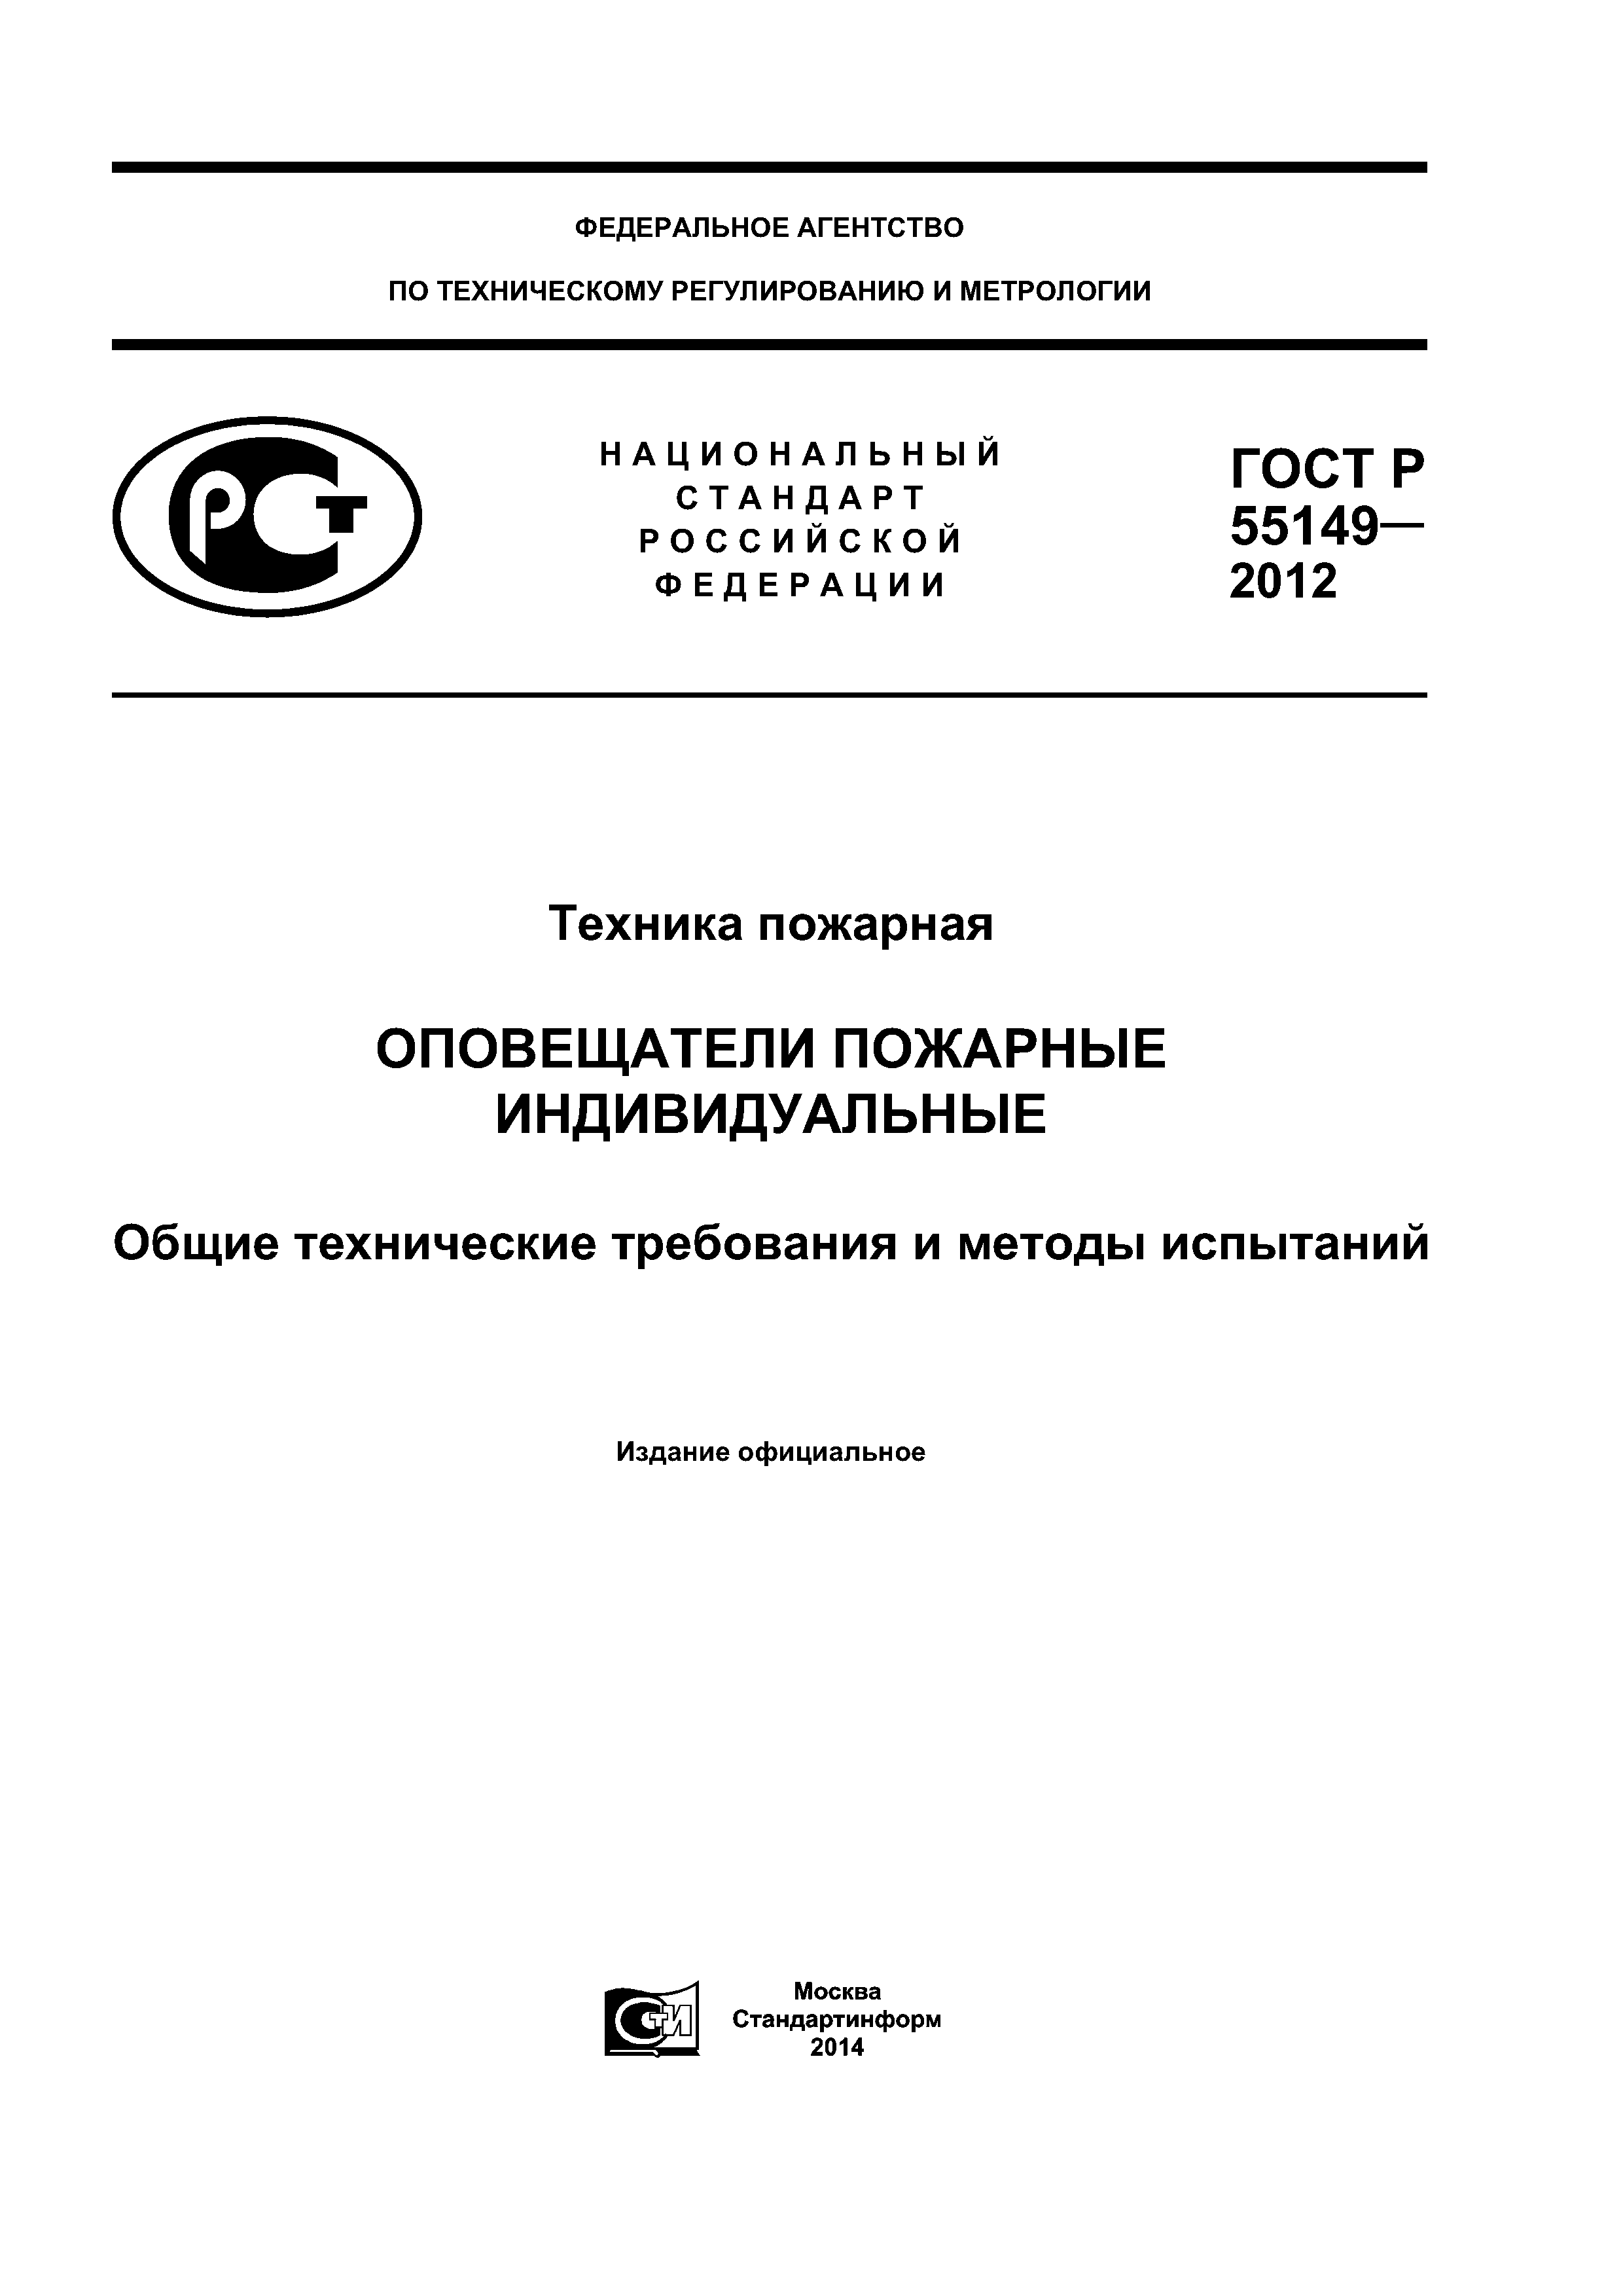 ГОСТ Р 55149-2012